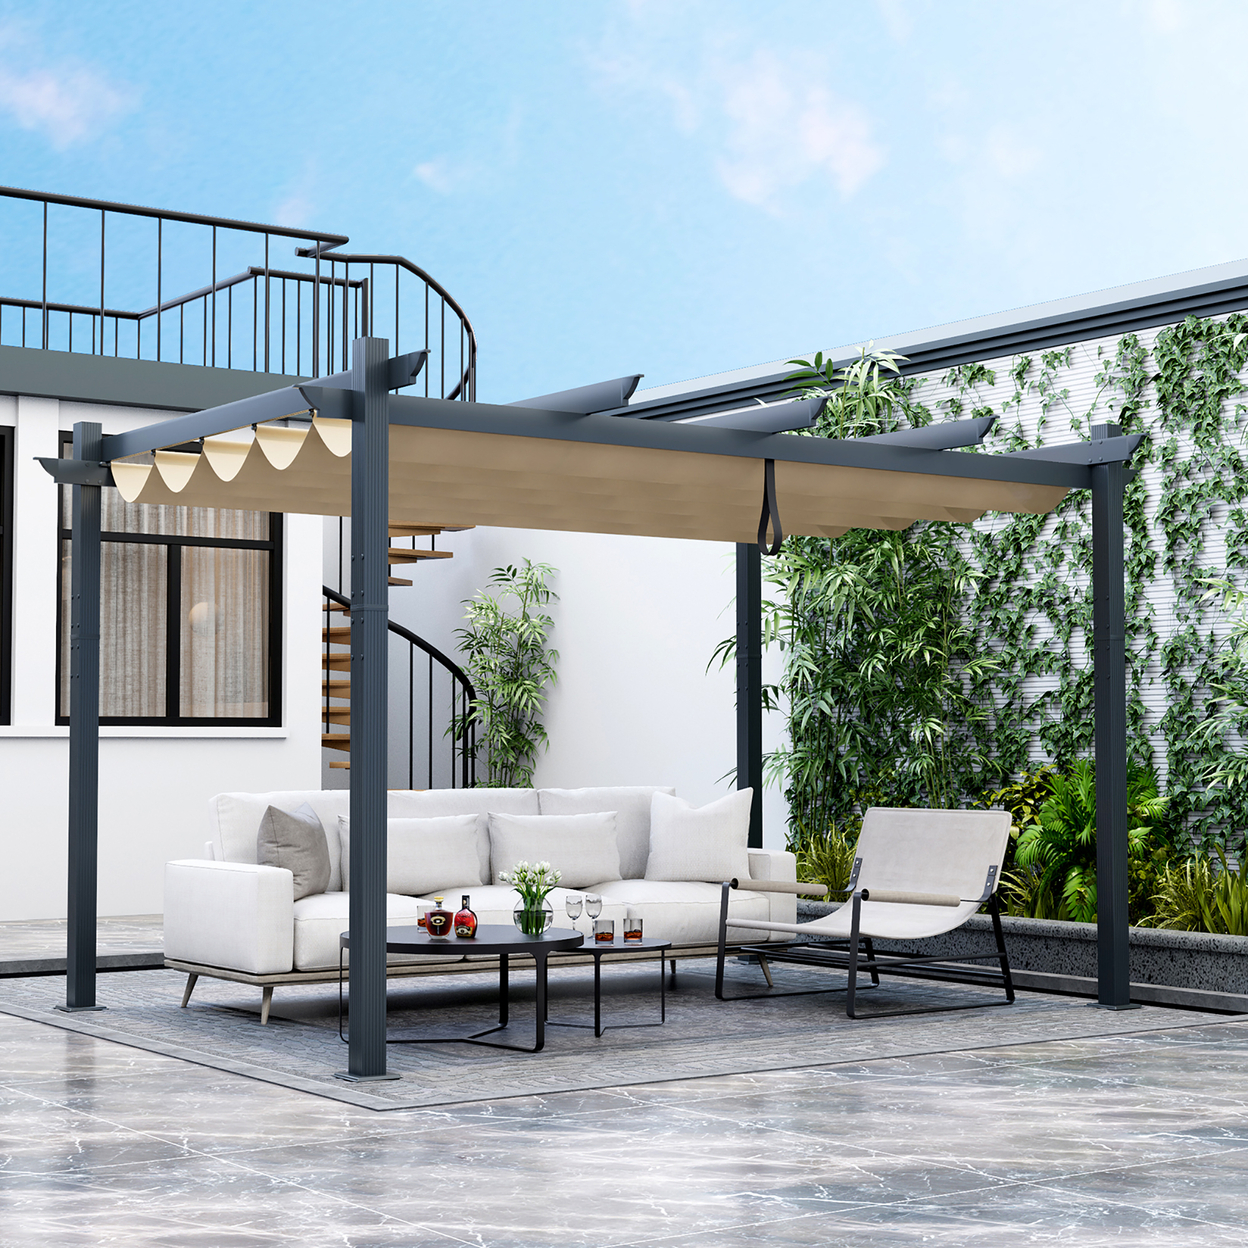 10 X 13ft Outdoor Aluminum Retractable Pergola Canopy Shelter Grape Trellis - Beige